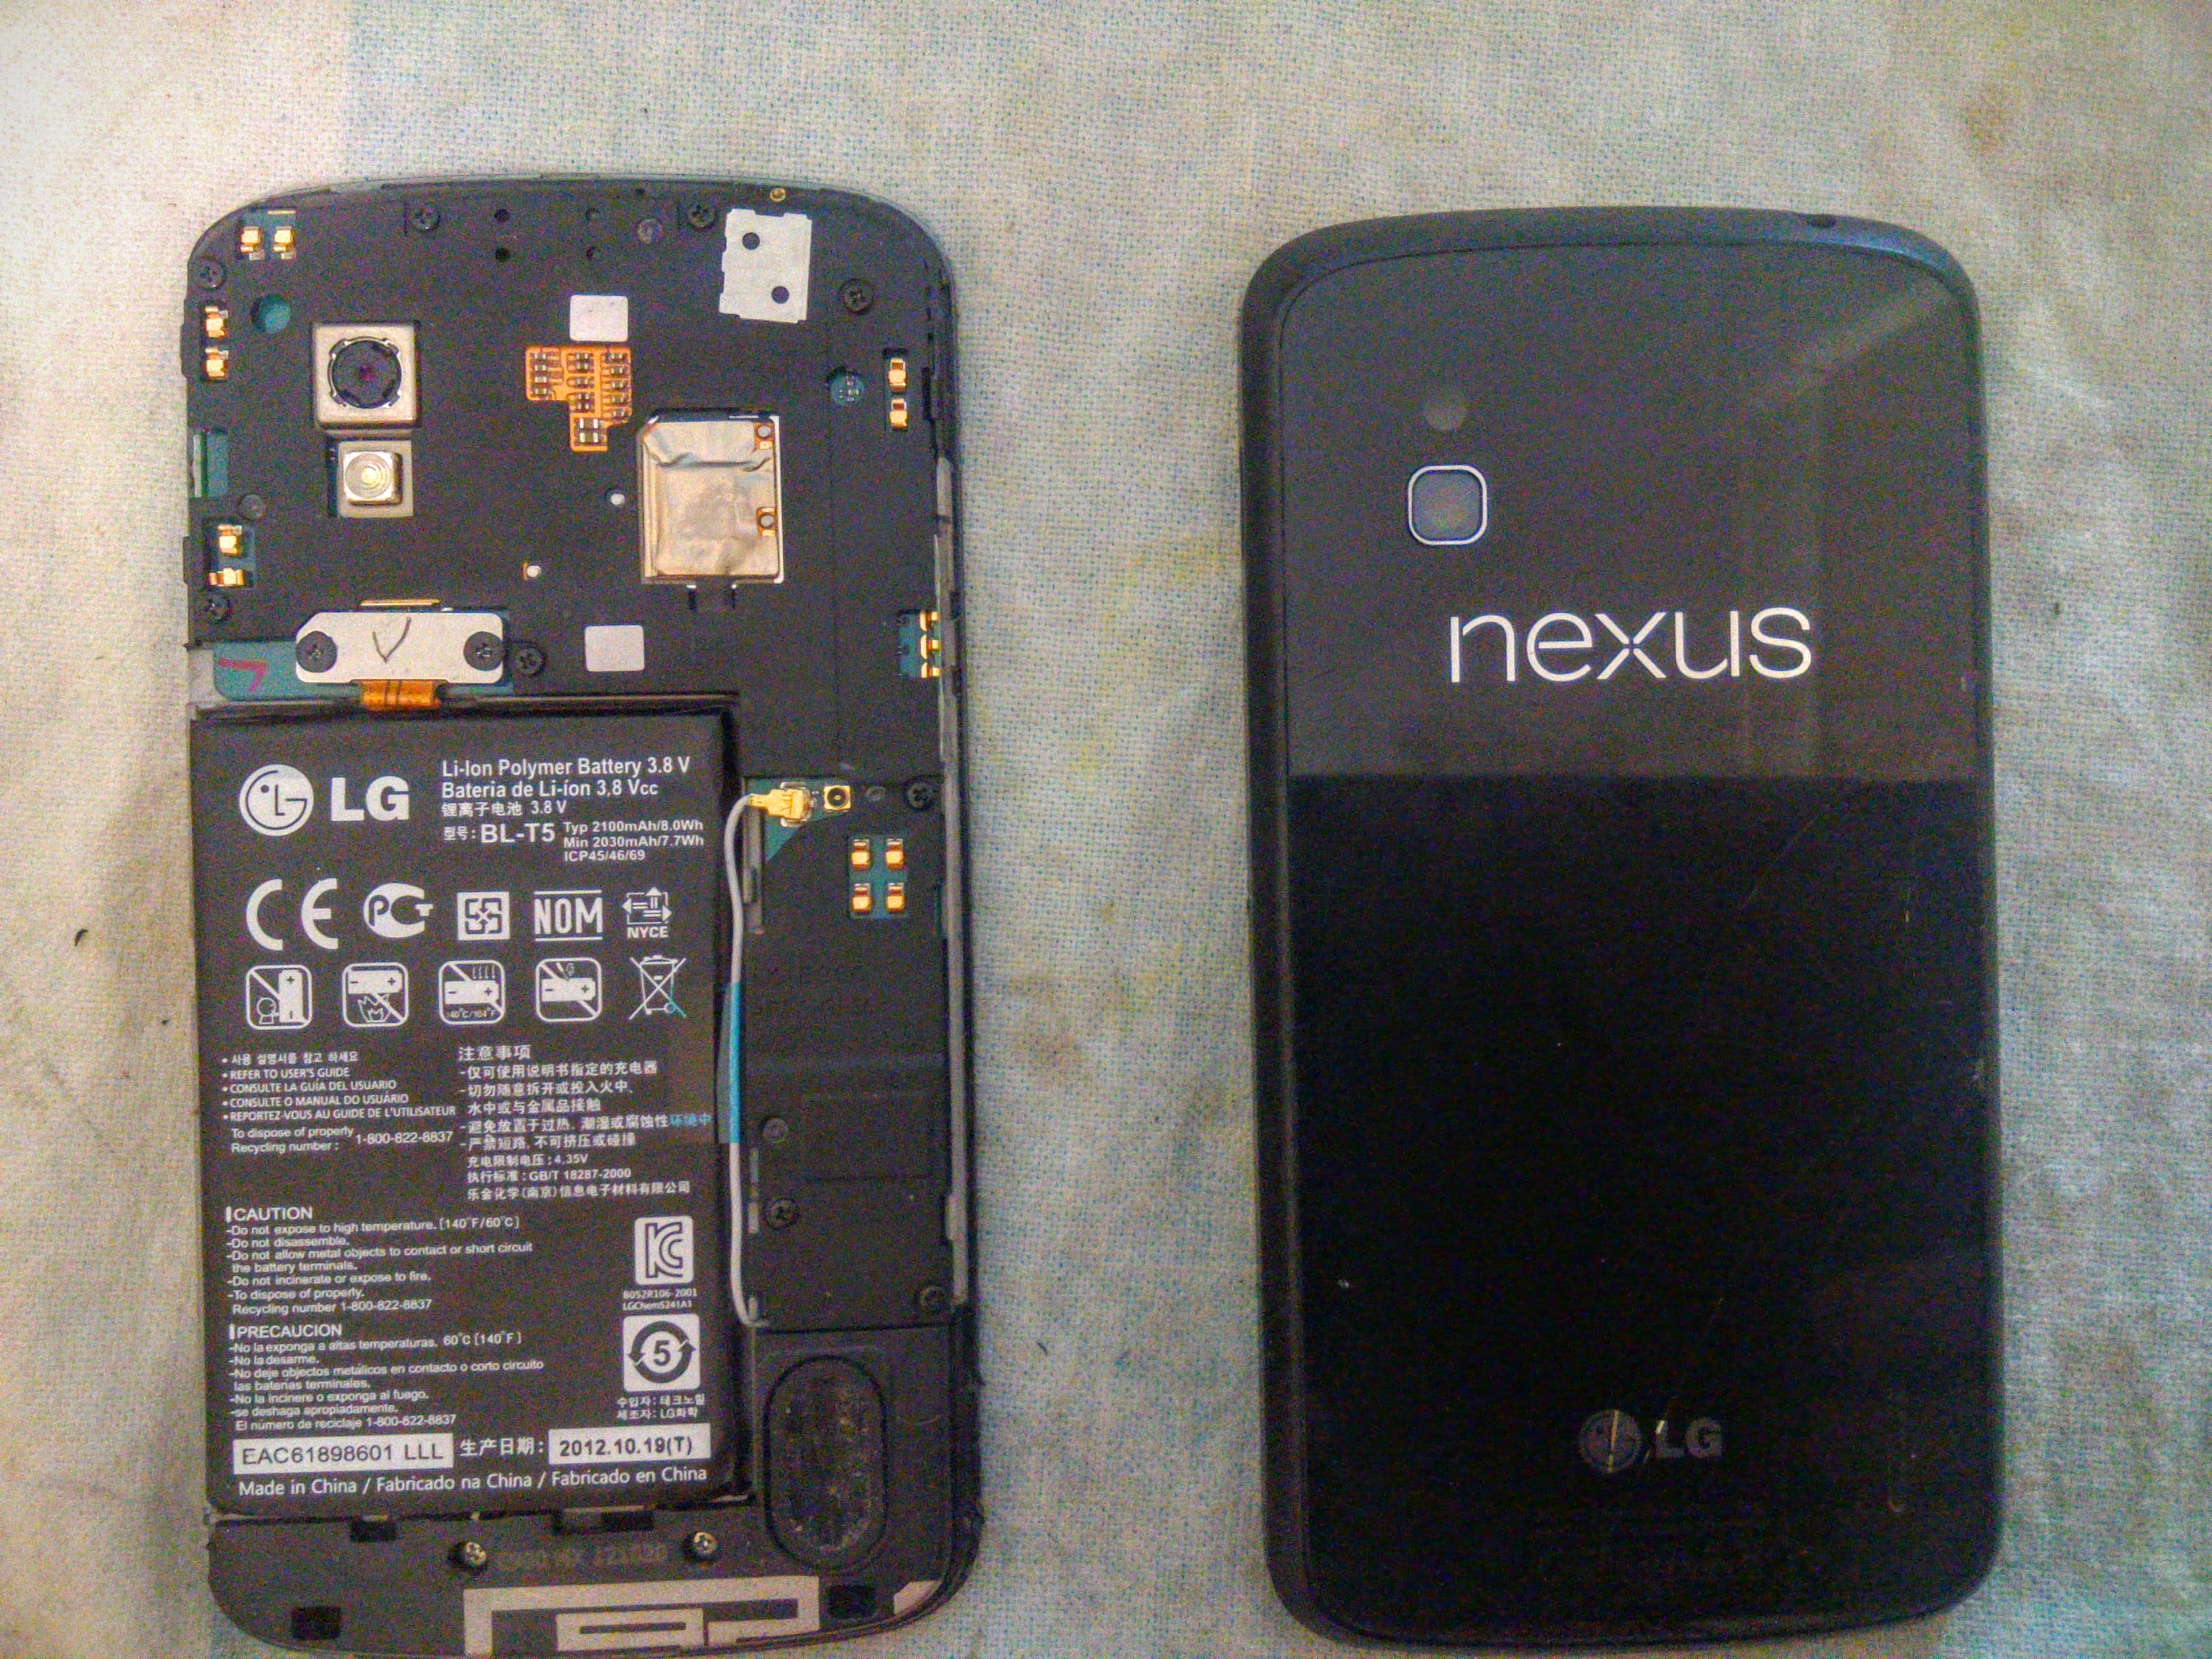 Nexus 4 (Mako) with the case taken off